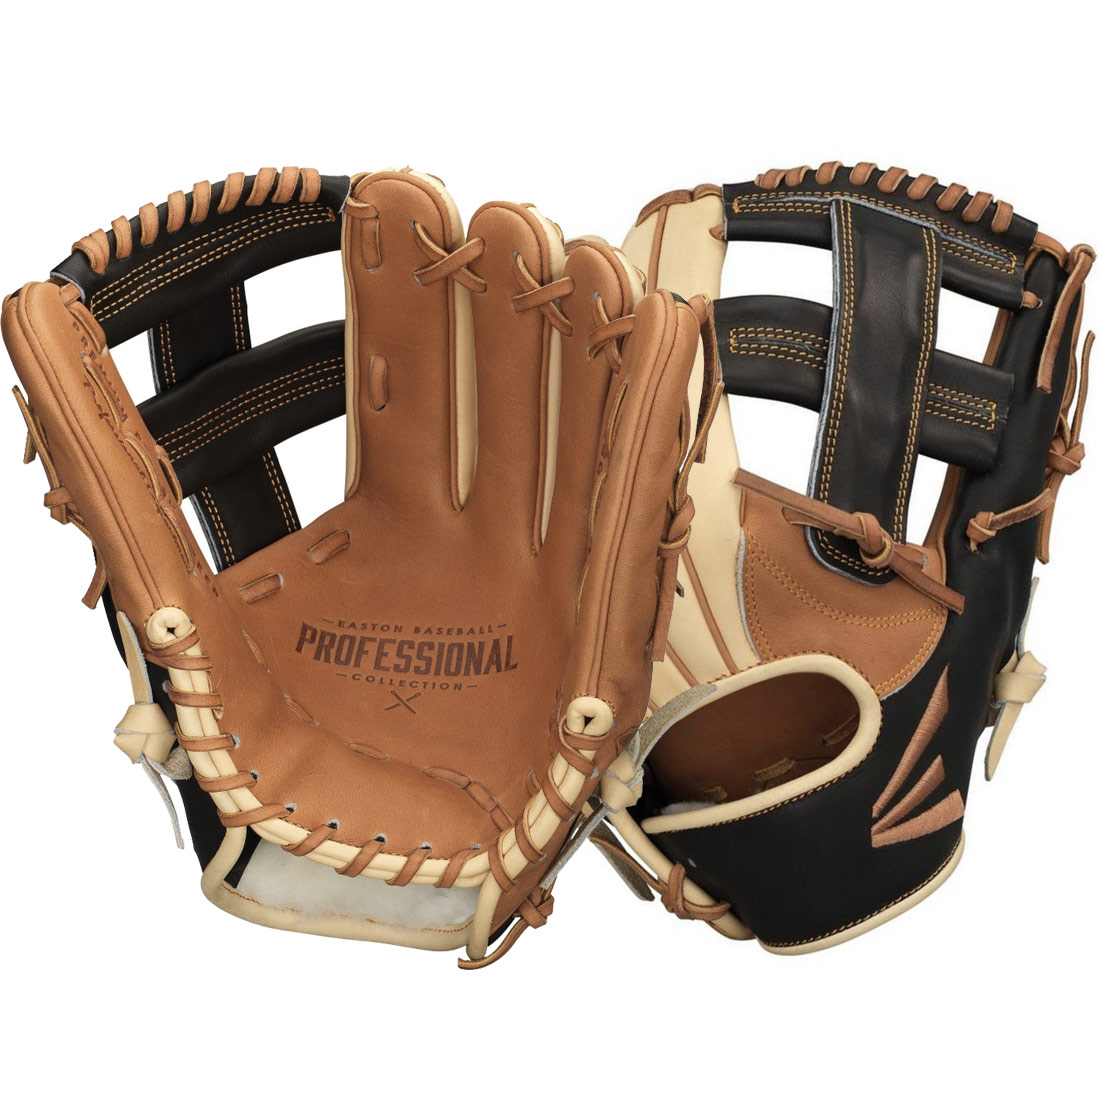 Easton Pro Collection Baseball Glove 11.75\" PCHC32